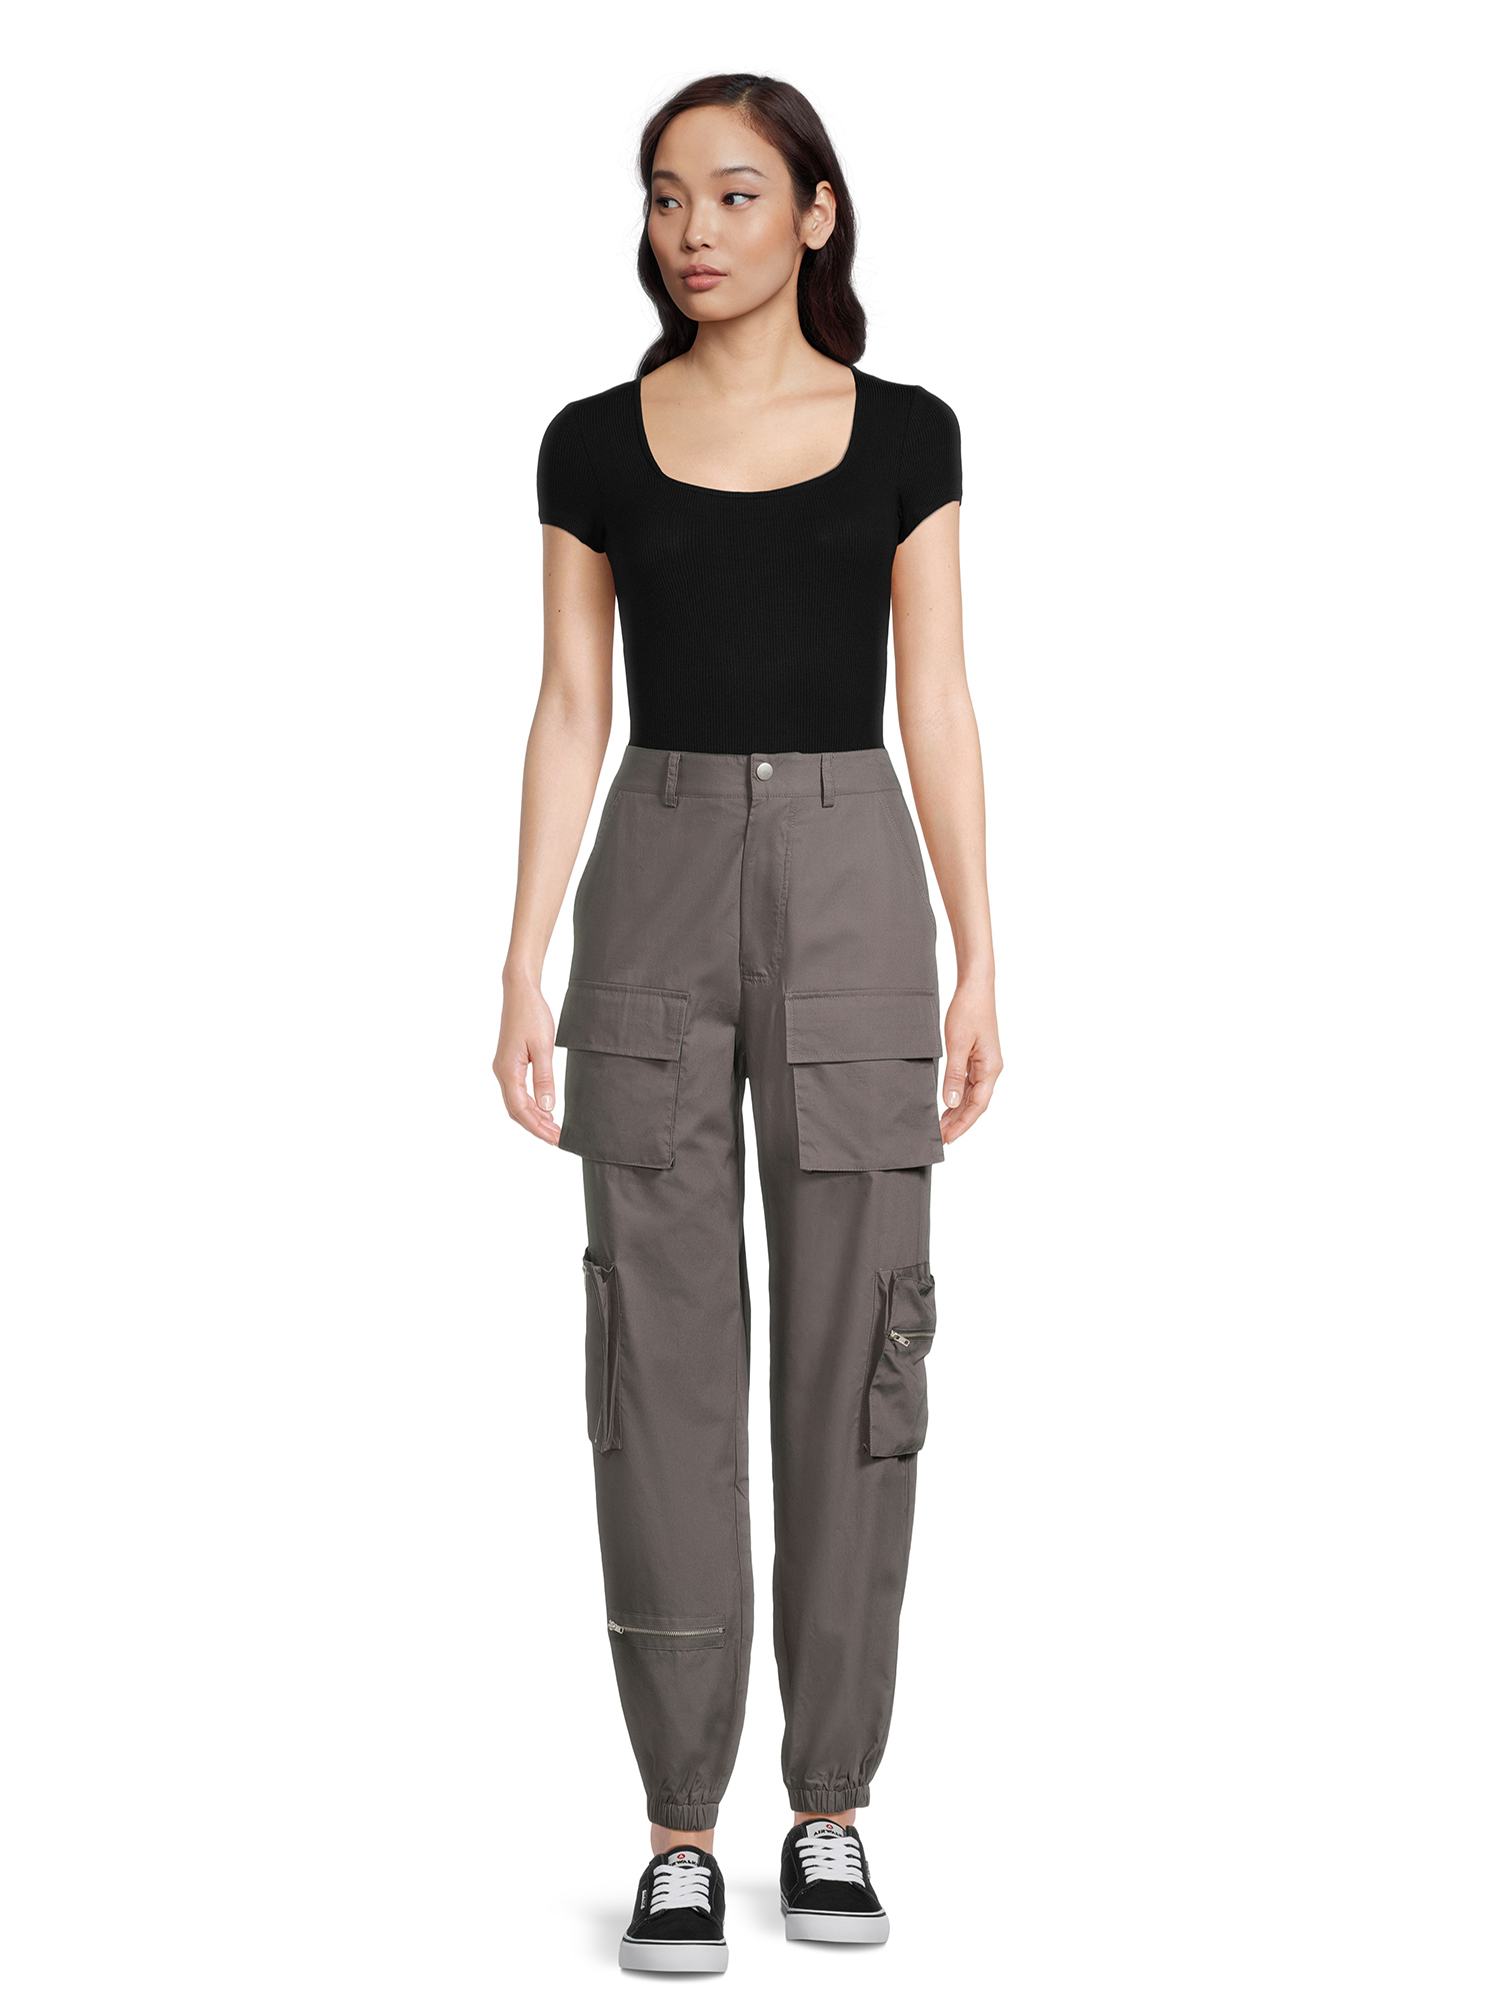 Liv & Lottie Juniors Cargo Pants with Zippers, Sizes S-XL - Walmart.com